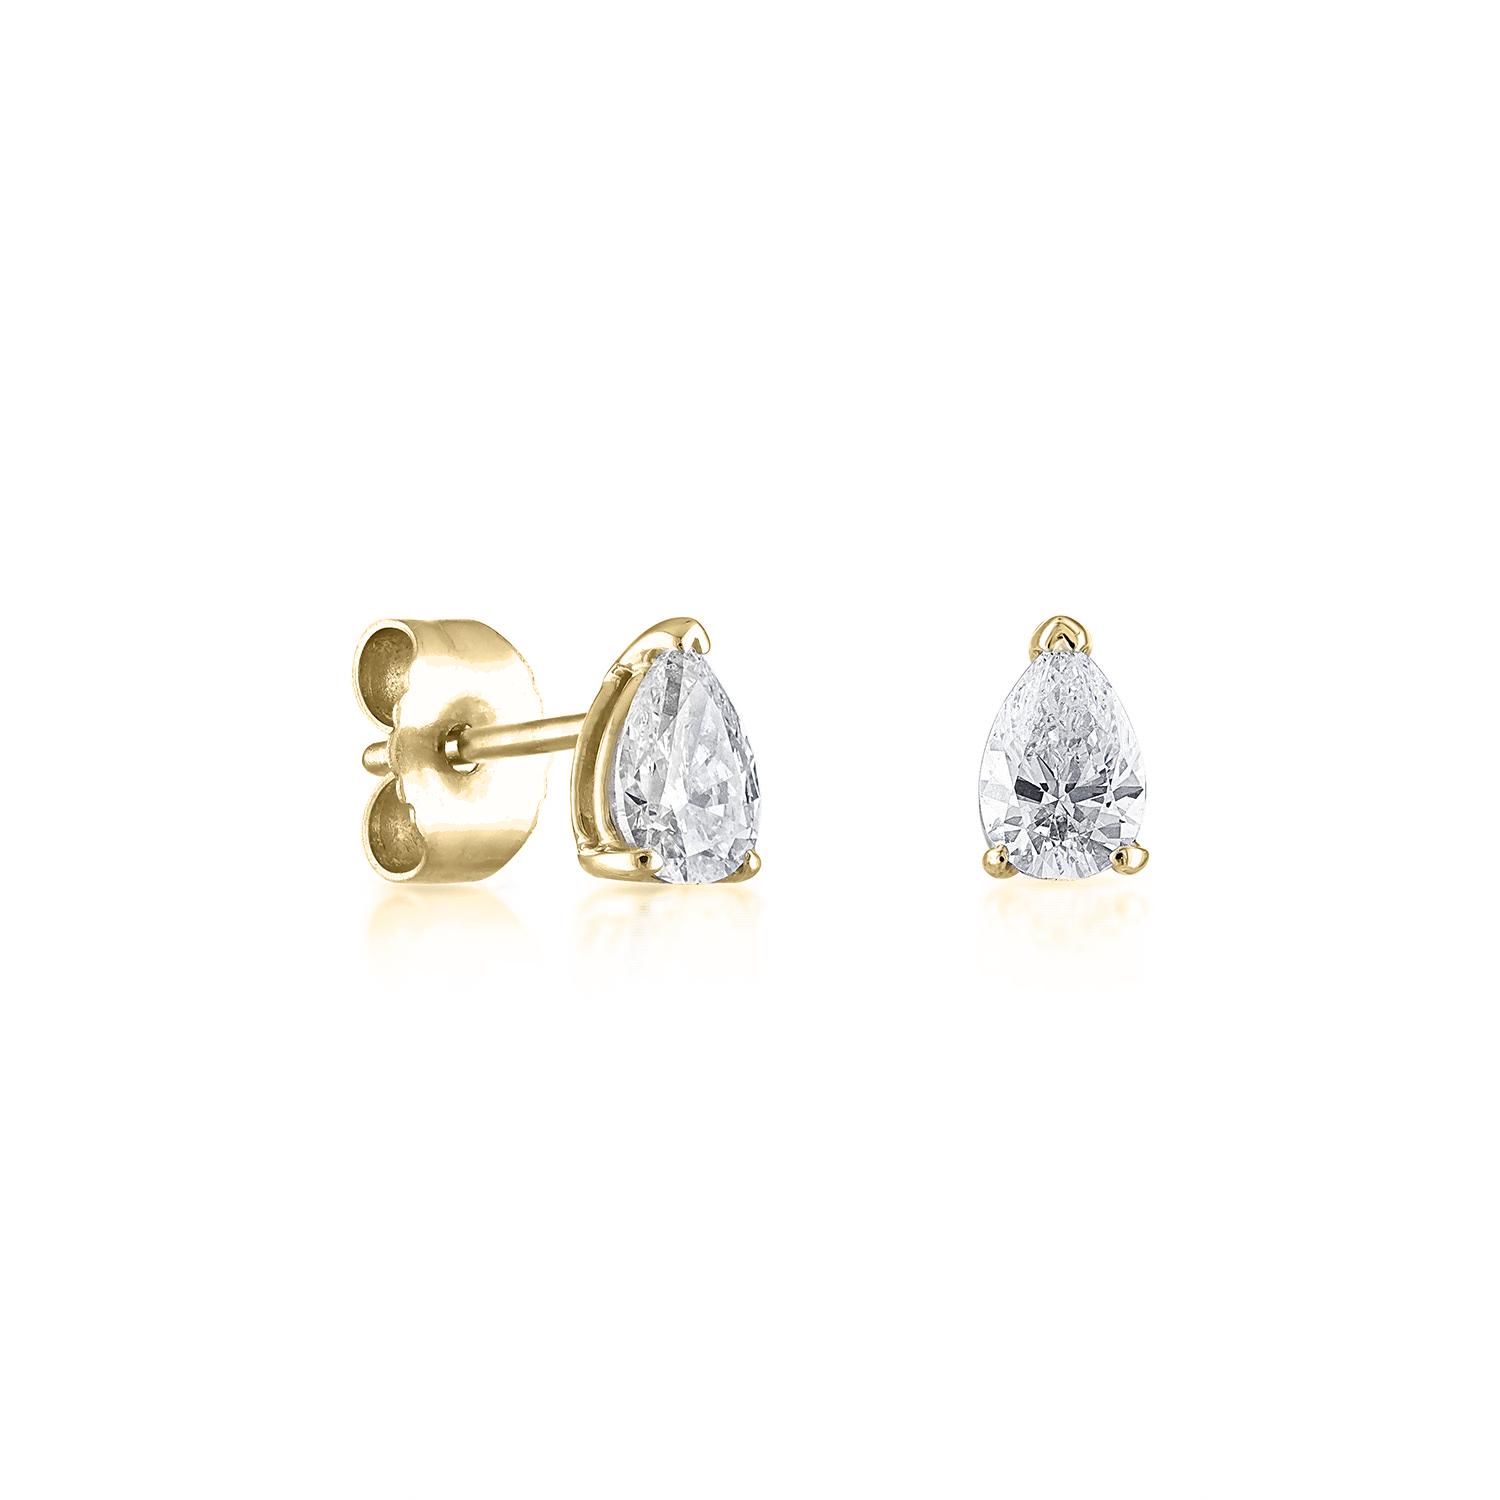 Brass stud earrings adorned with semi-precious Pearl stones – Vama Jaipur